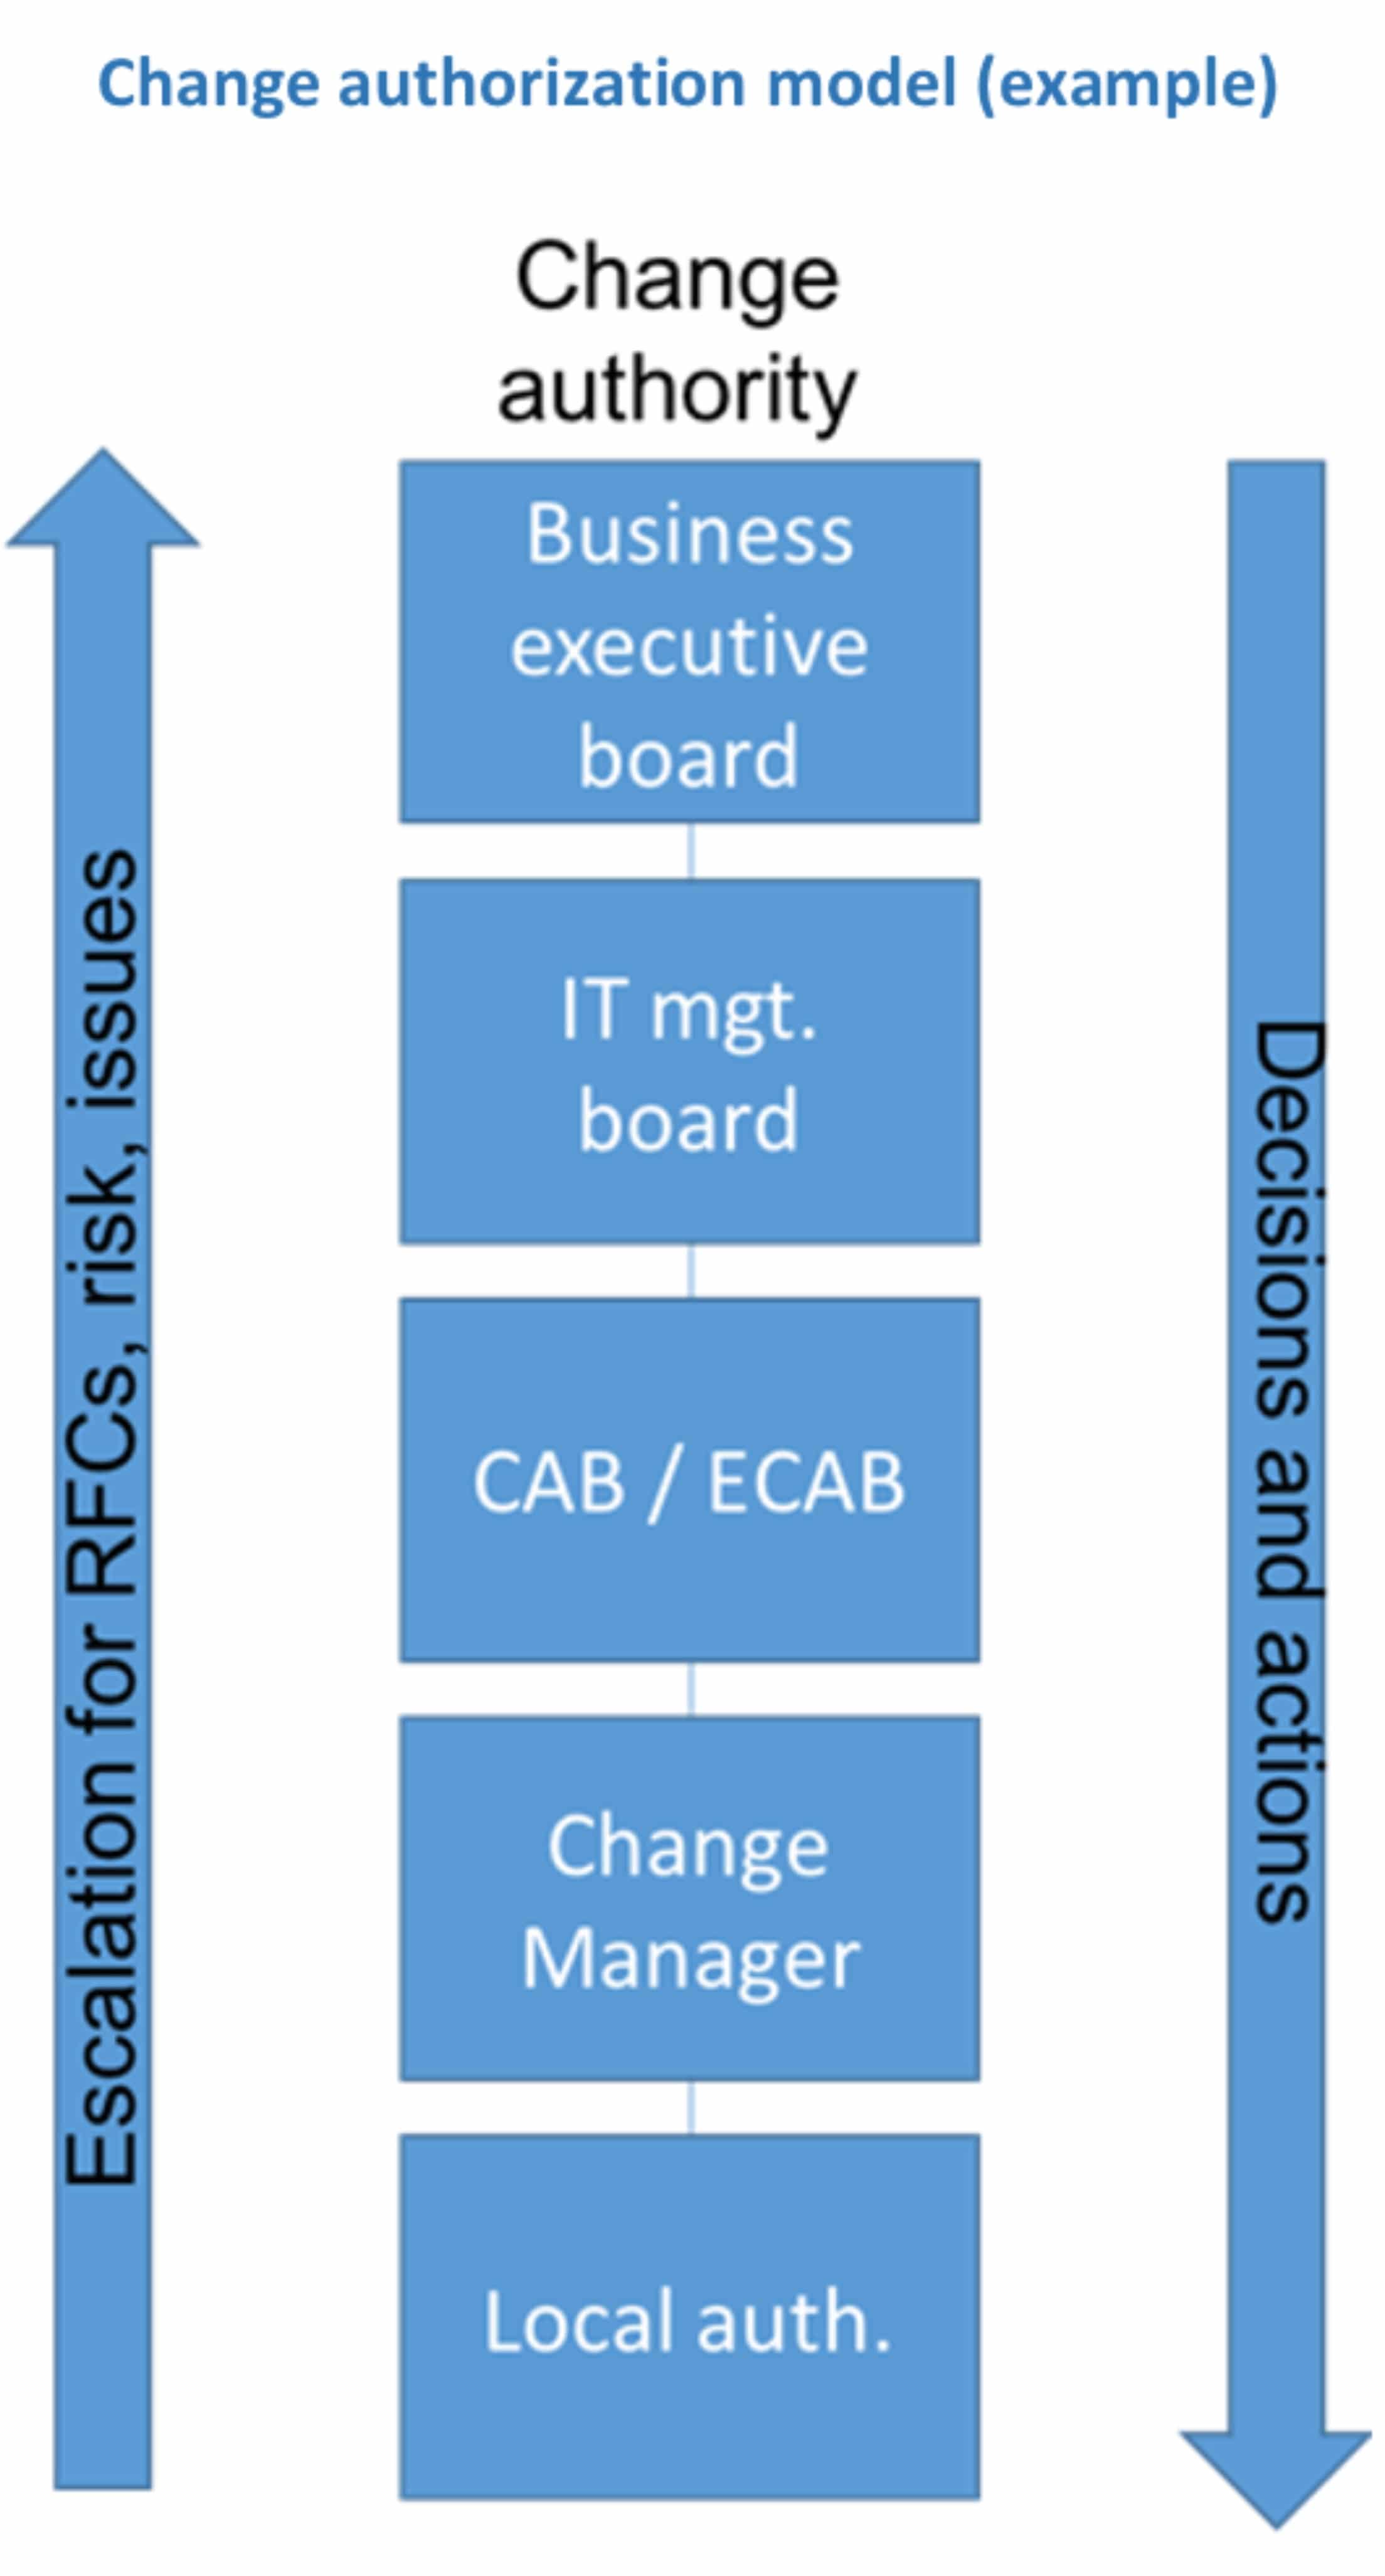 Change authorization model (example)